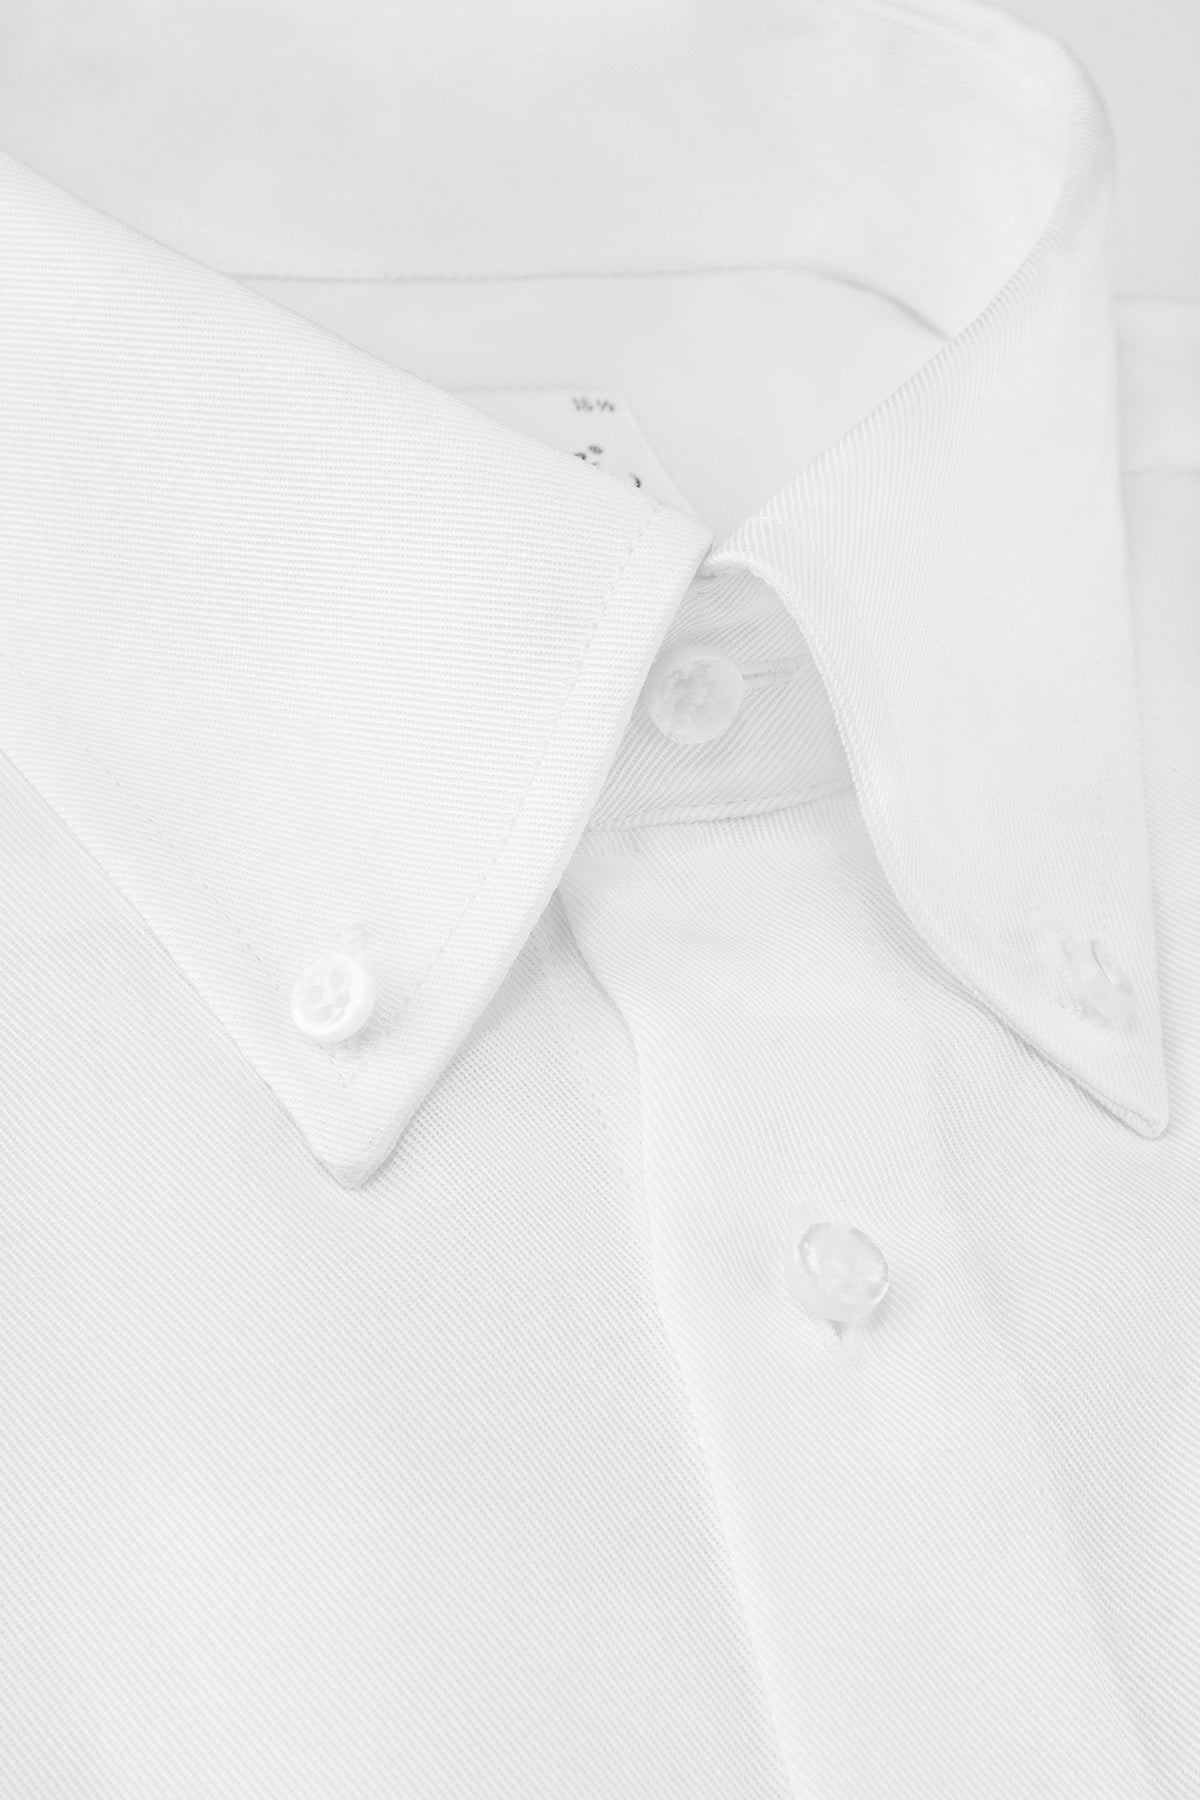 White button down tencel regular fit shirt